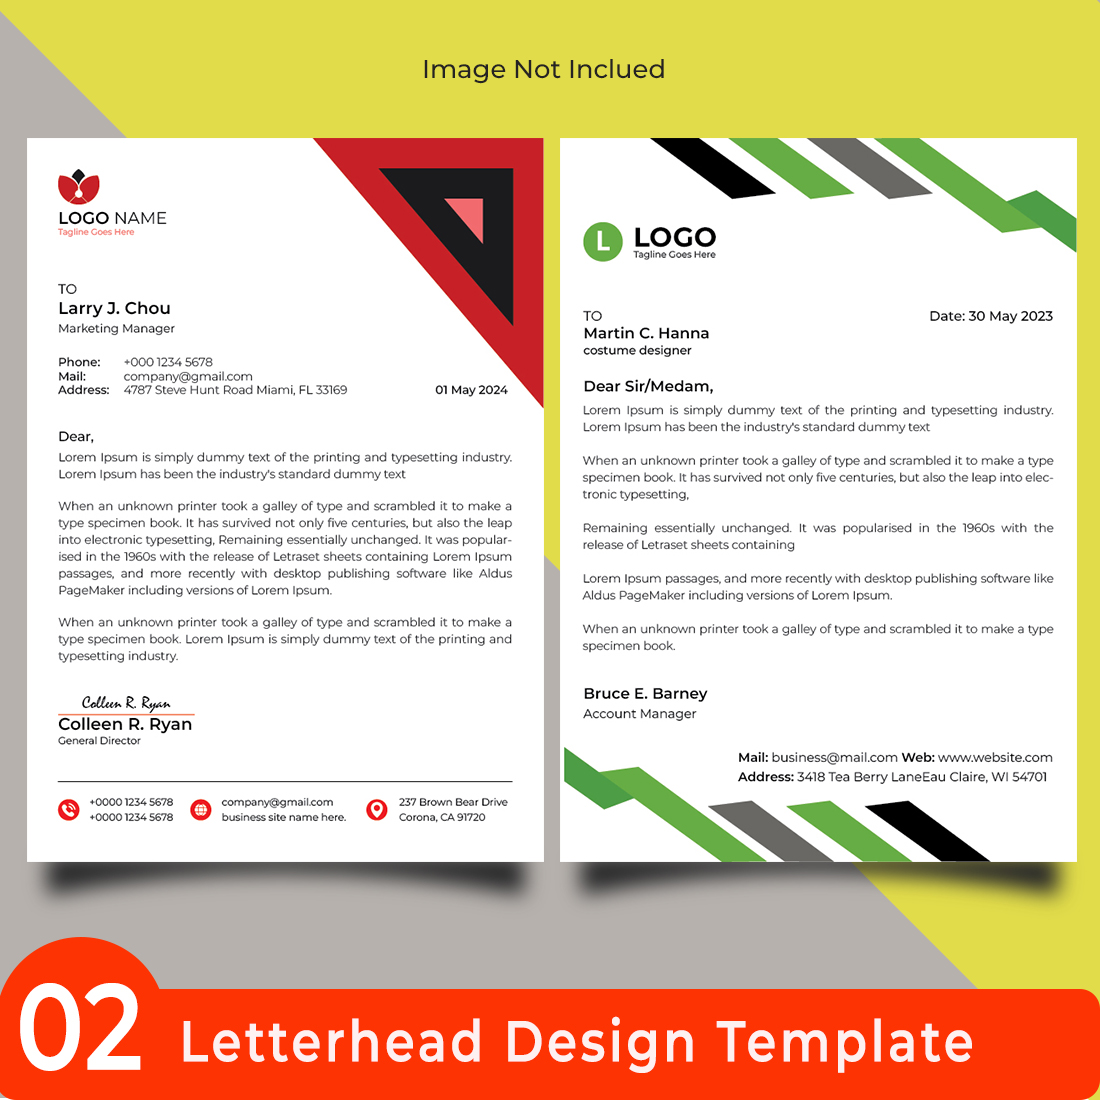 Letterhead Design Template cover image.